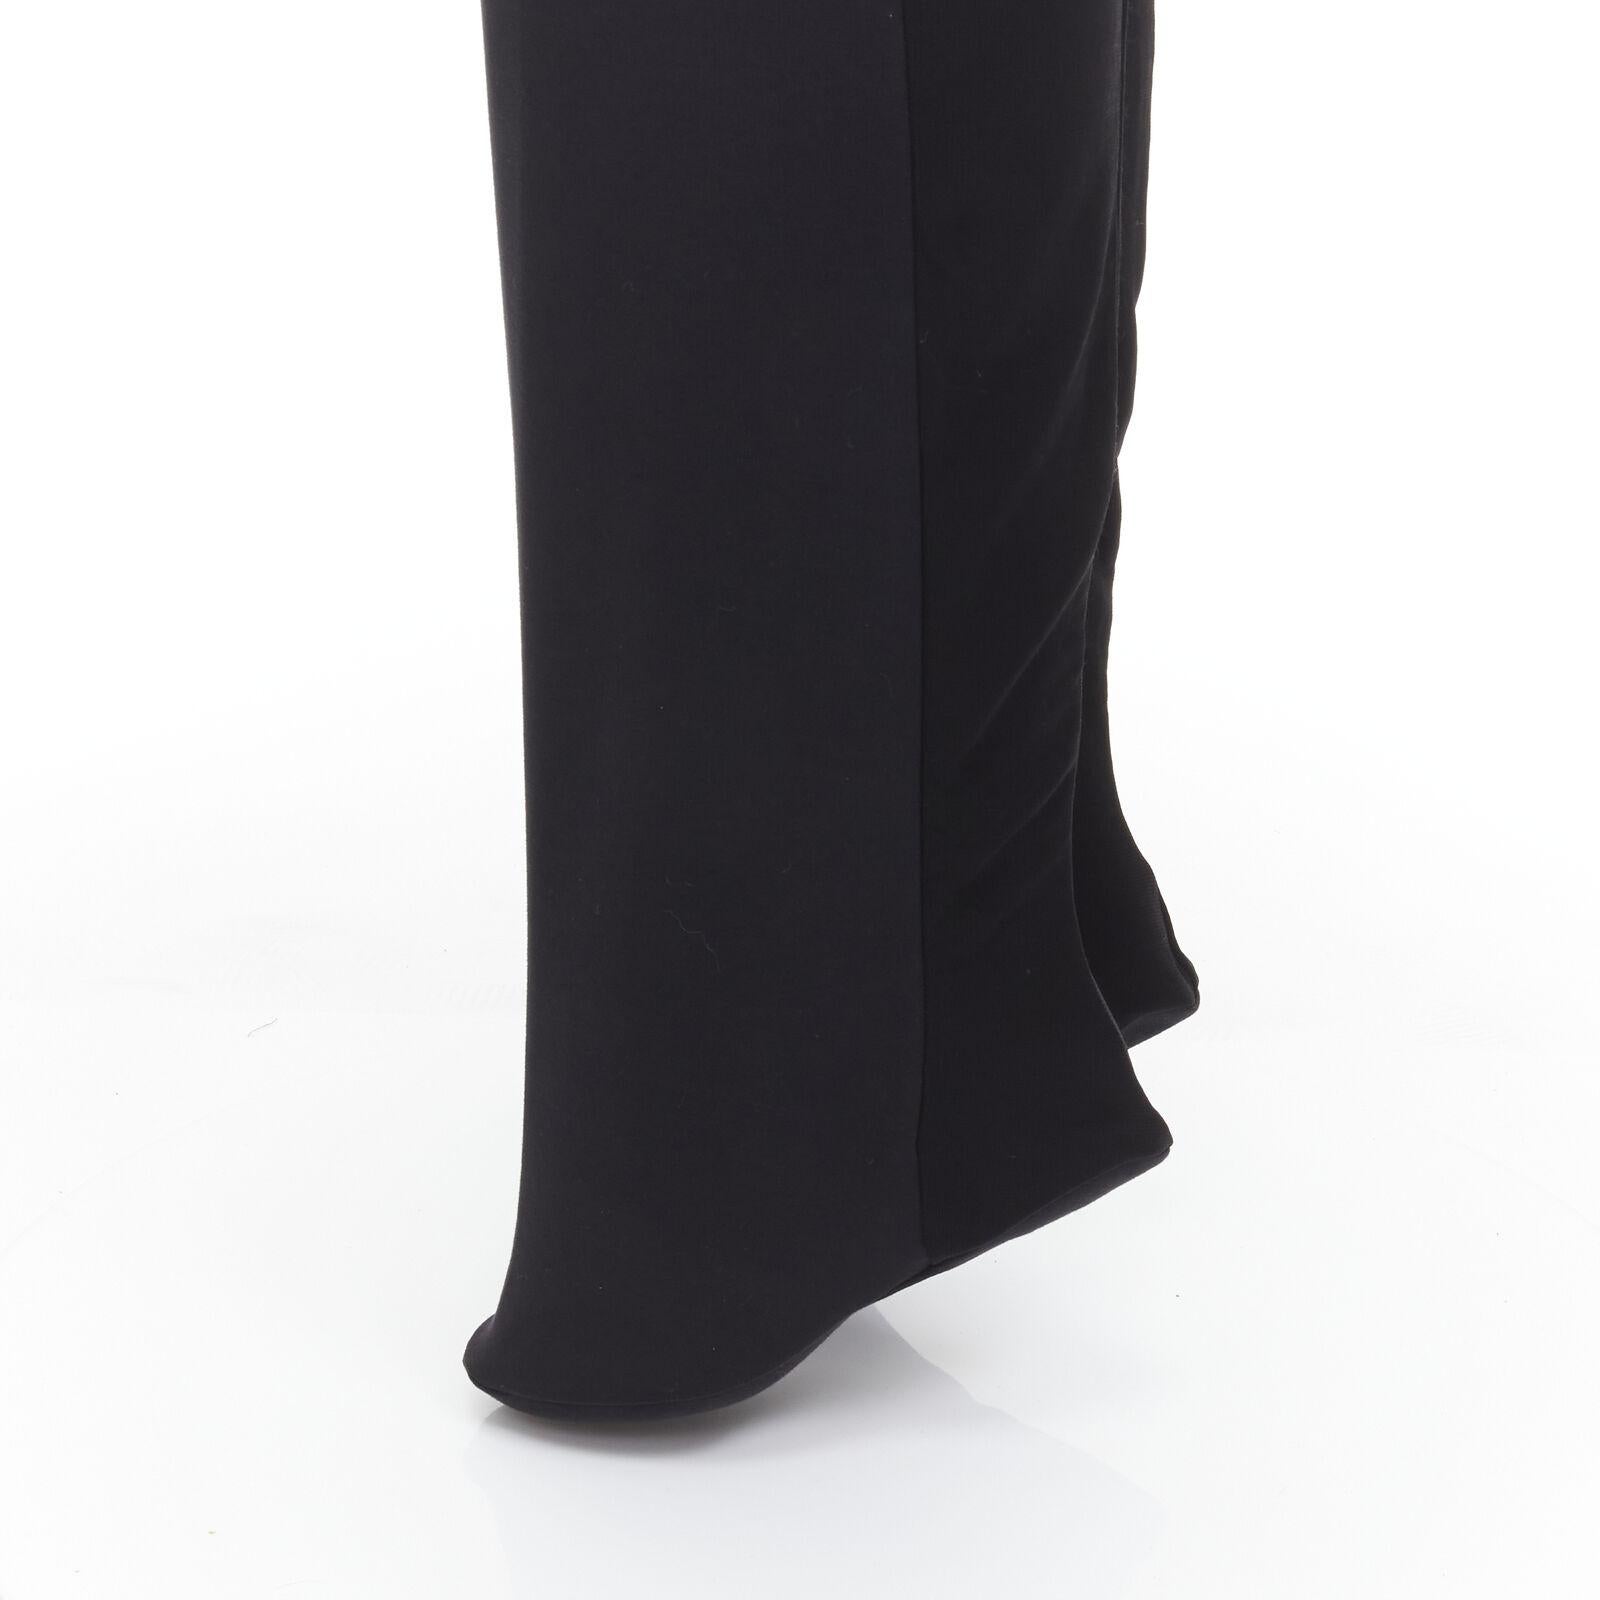 MARTIN MARGIELA Vintage Runway black minimal straight leg stocking pants IT42 M
Reference: EACN/A00070
Brand: Martin Margiela
Model: 29KA035
Collection: Runway
Material: Viscose, Blend
Color: Black
Pattern: Solid
Extra Details: Damaged zipper,